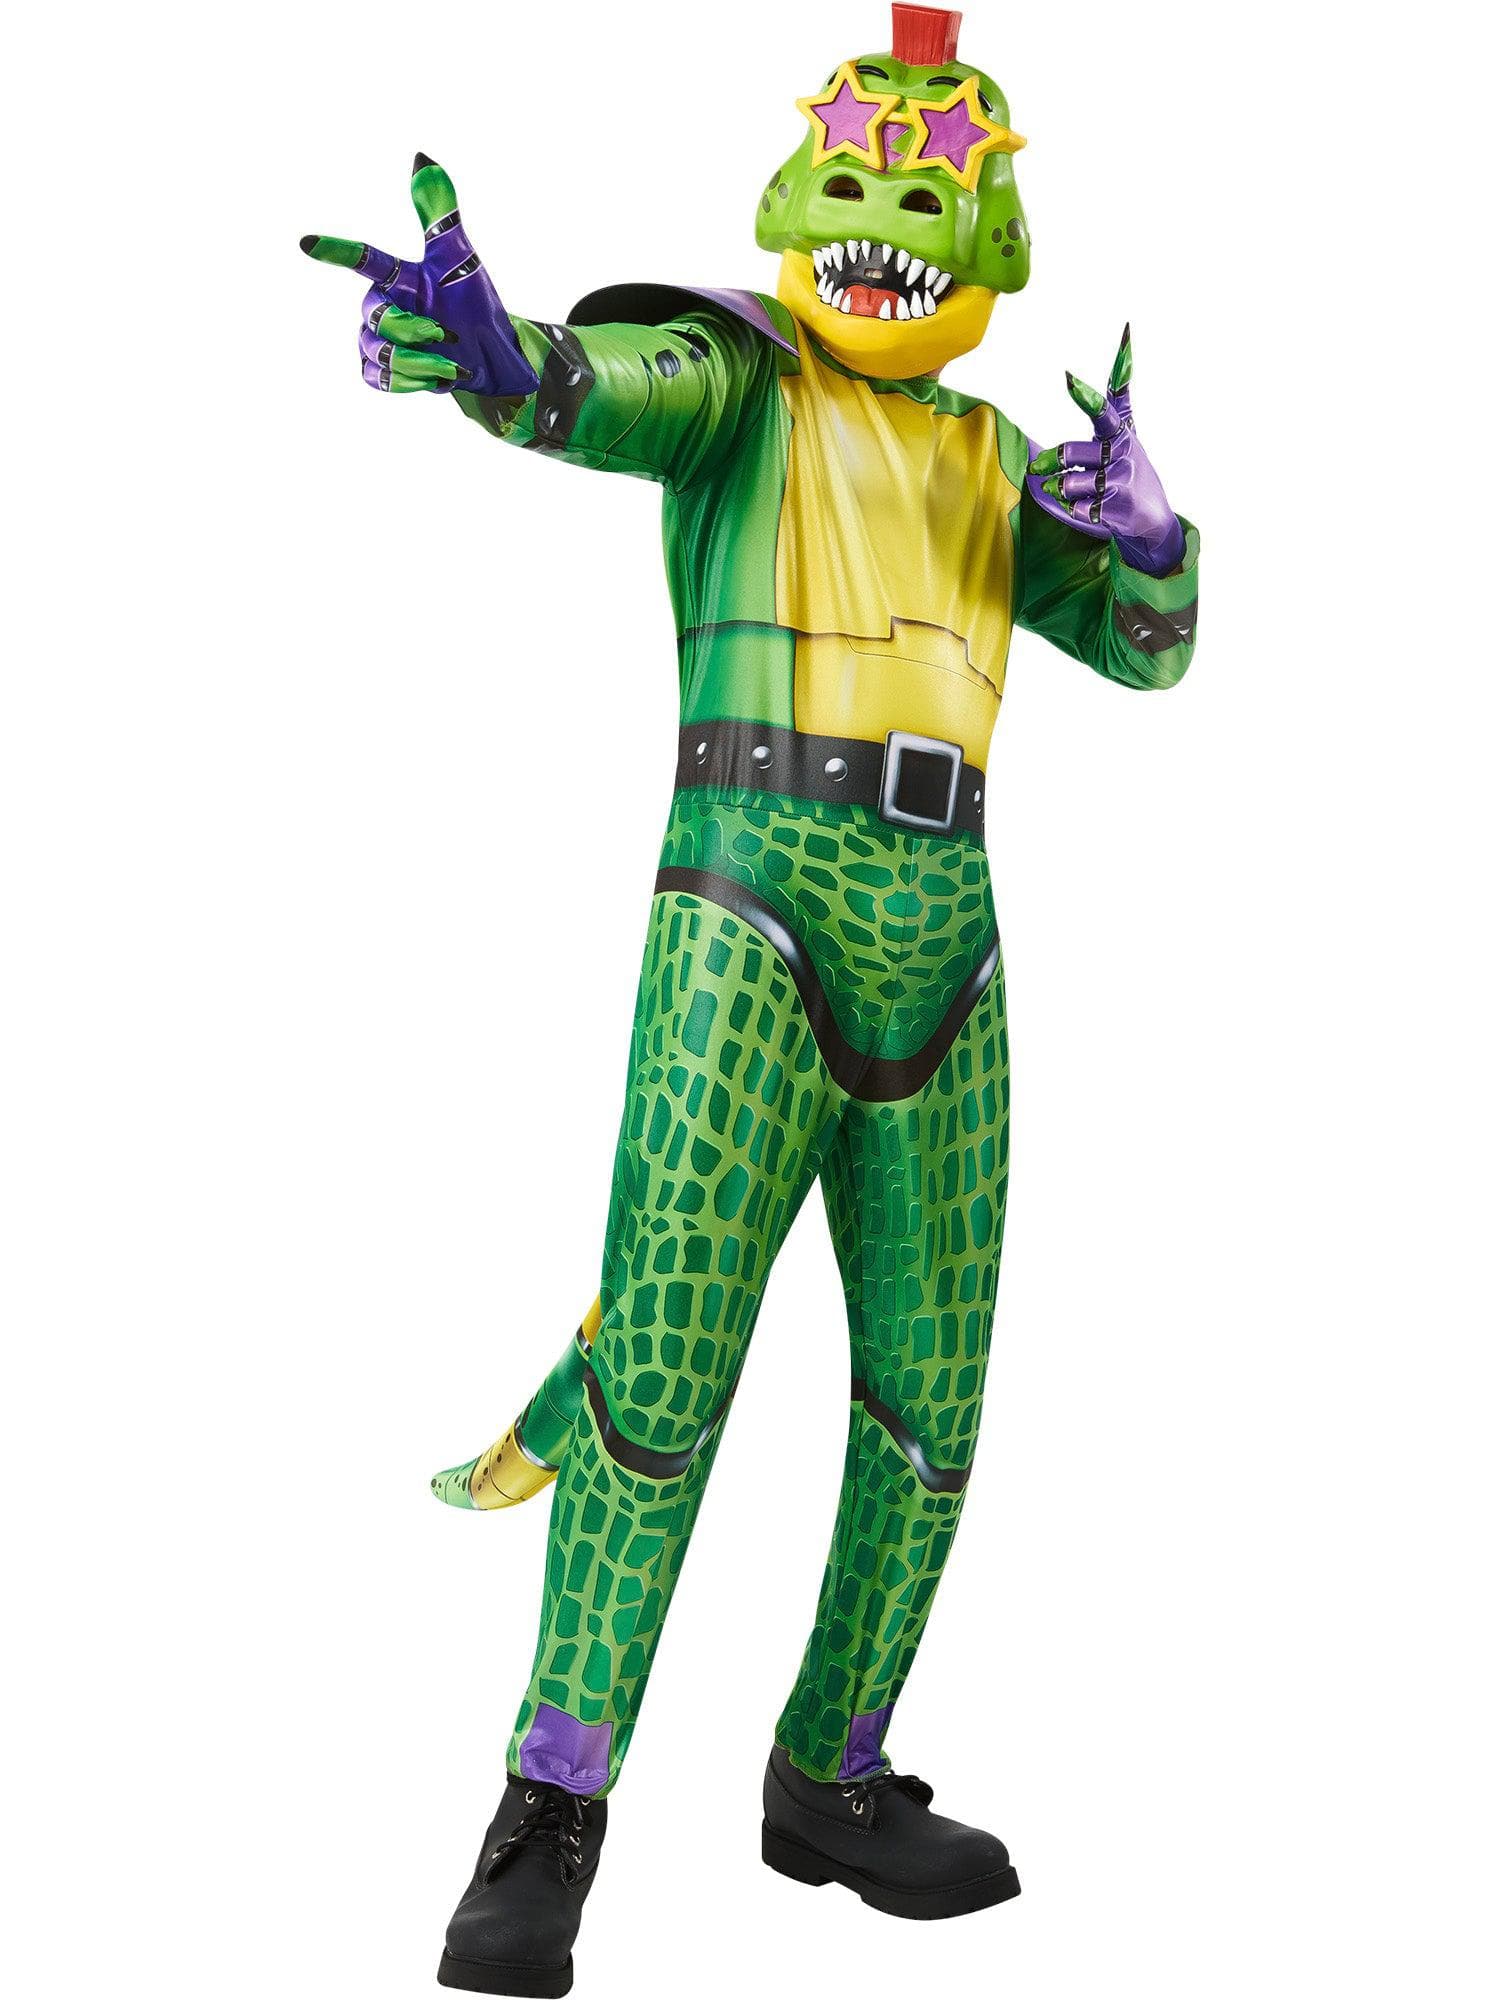 Five Nights at Freddy's Montgomery Gator Kids Costume - costumes.com